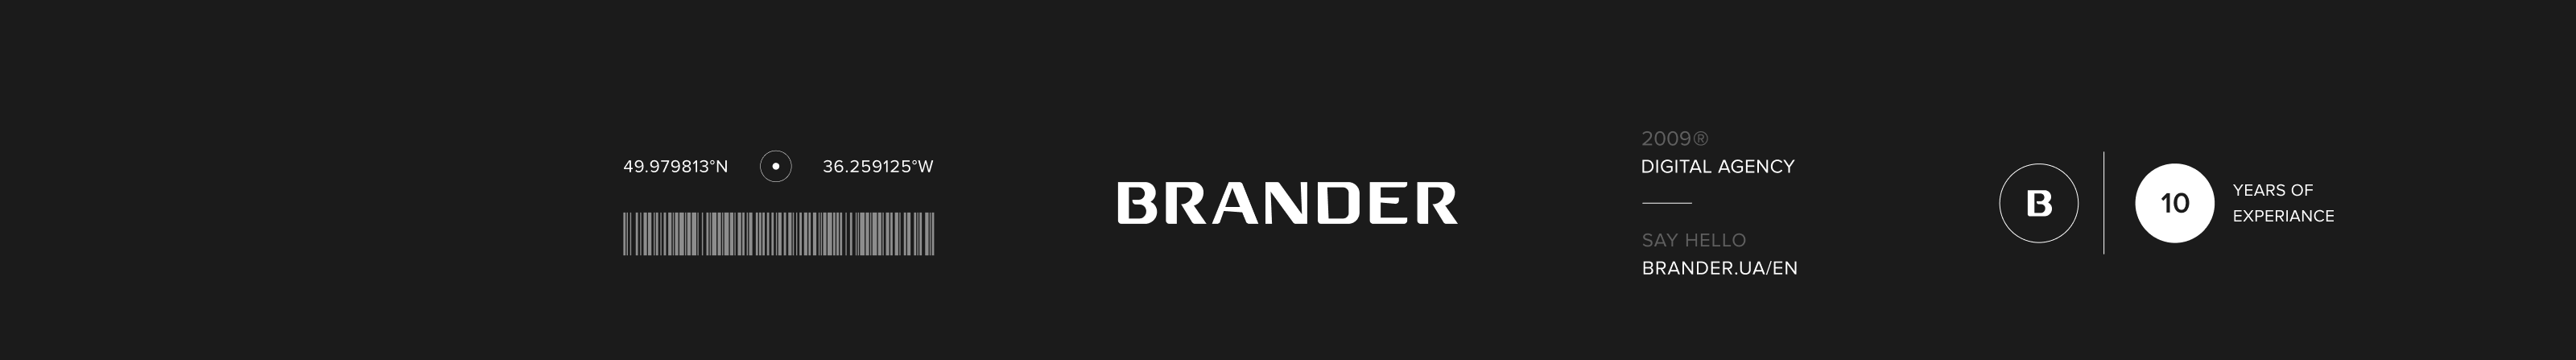 Brander Agency's profile banner